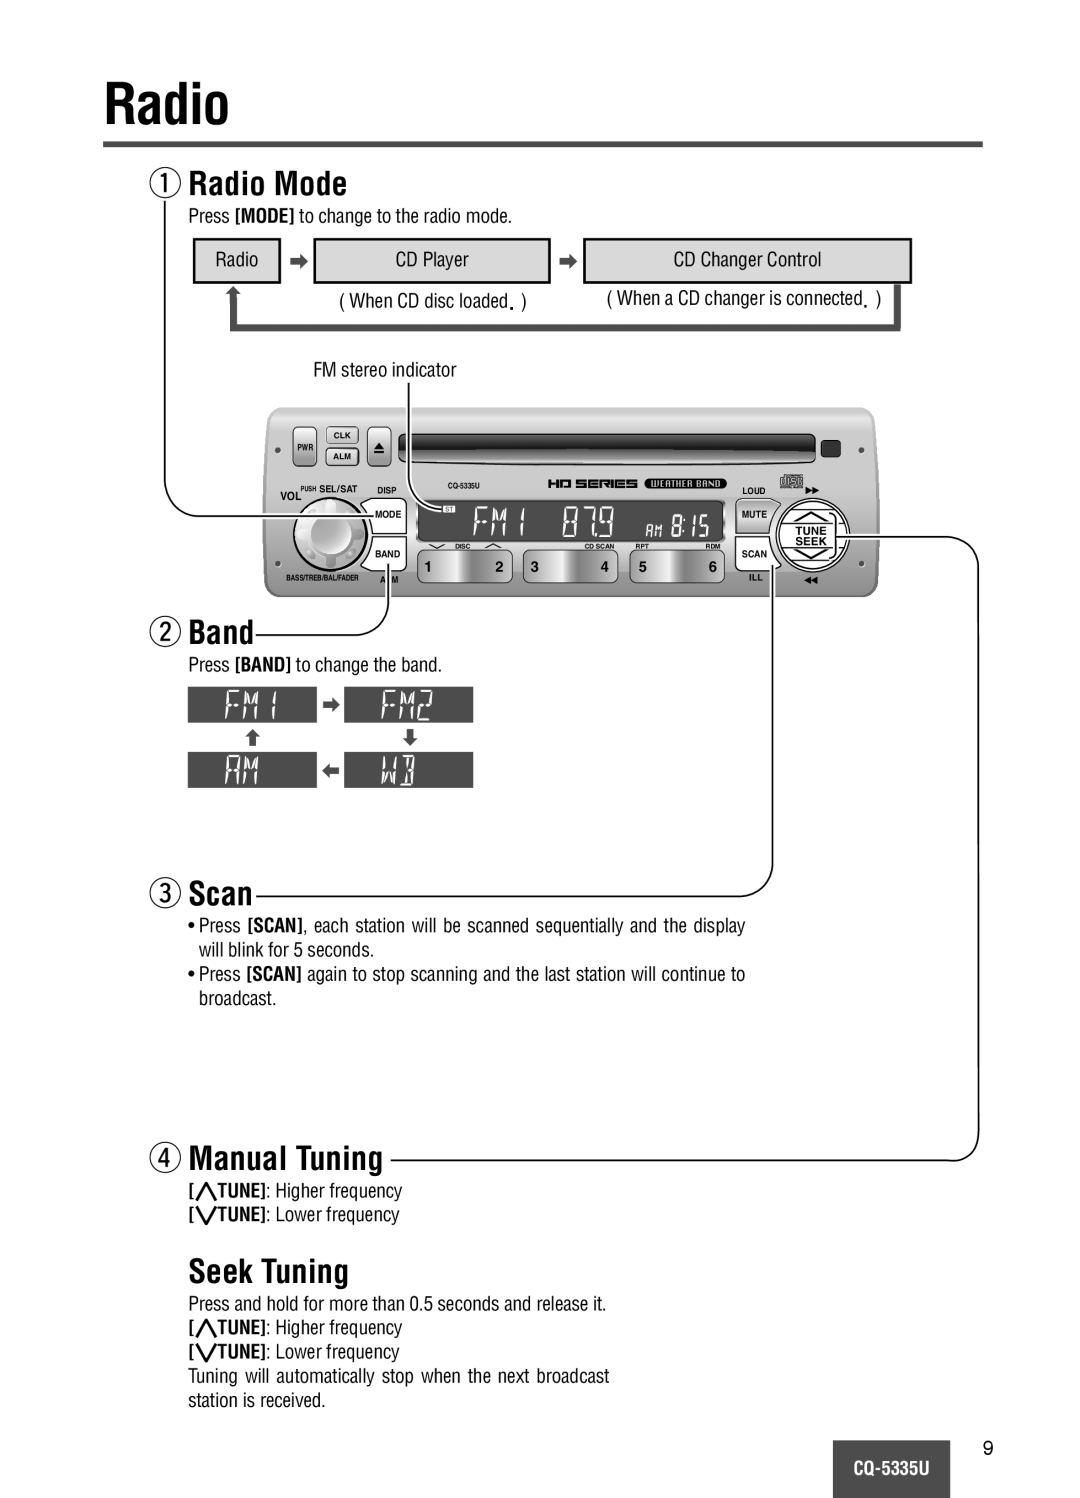 Panasonic CQ-5335U operating instructions q Radio Mode, w Band, e Scan, r Manual Tuning, Seek Tuning 